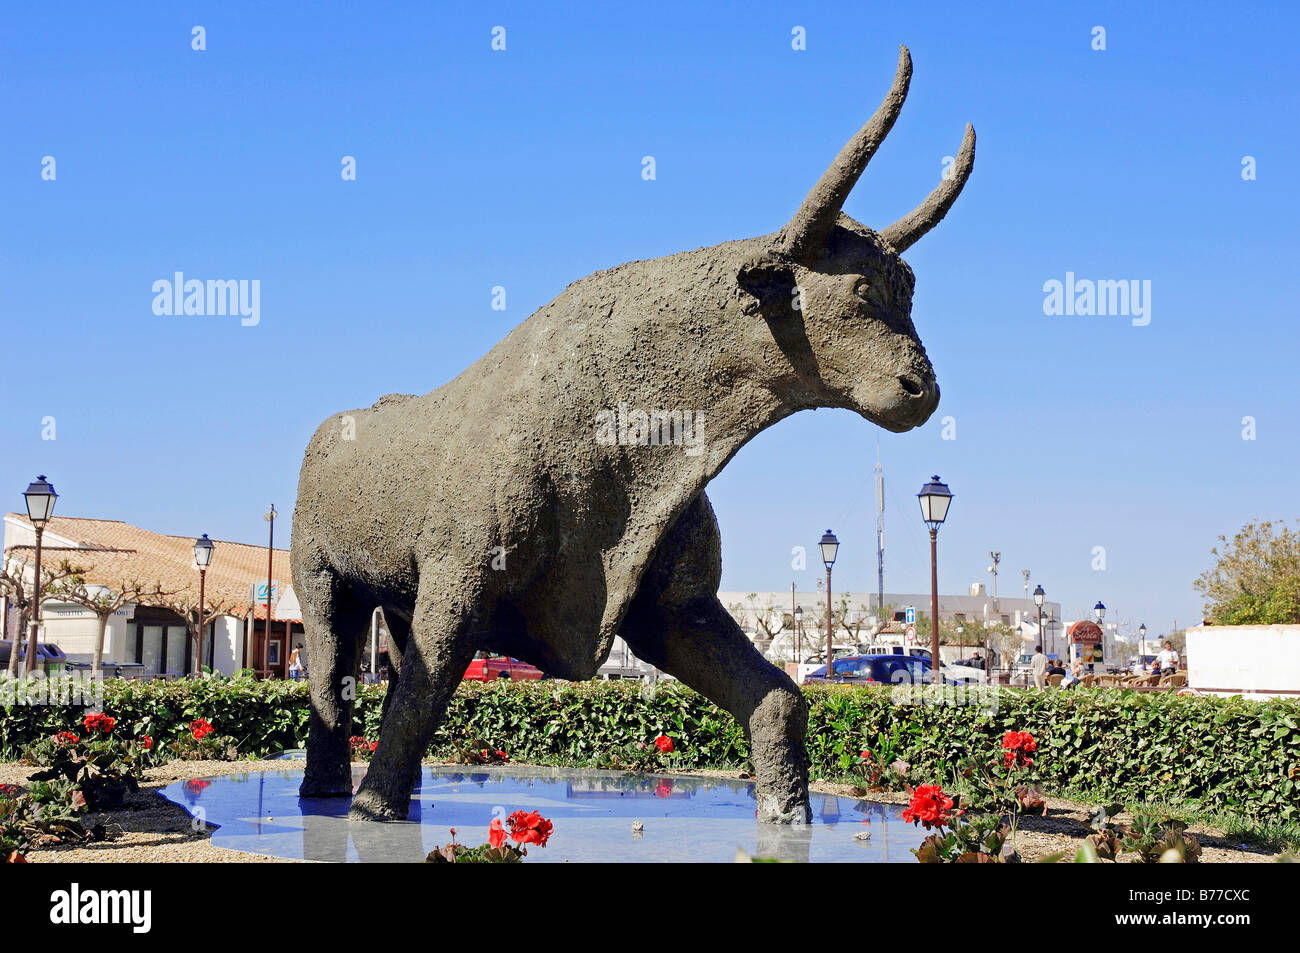 Statue of Camargue bull, Les Saintes-Maries-de-la-Mer, Camargue ...